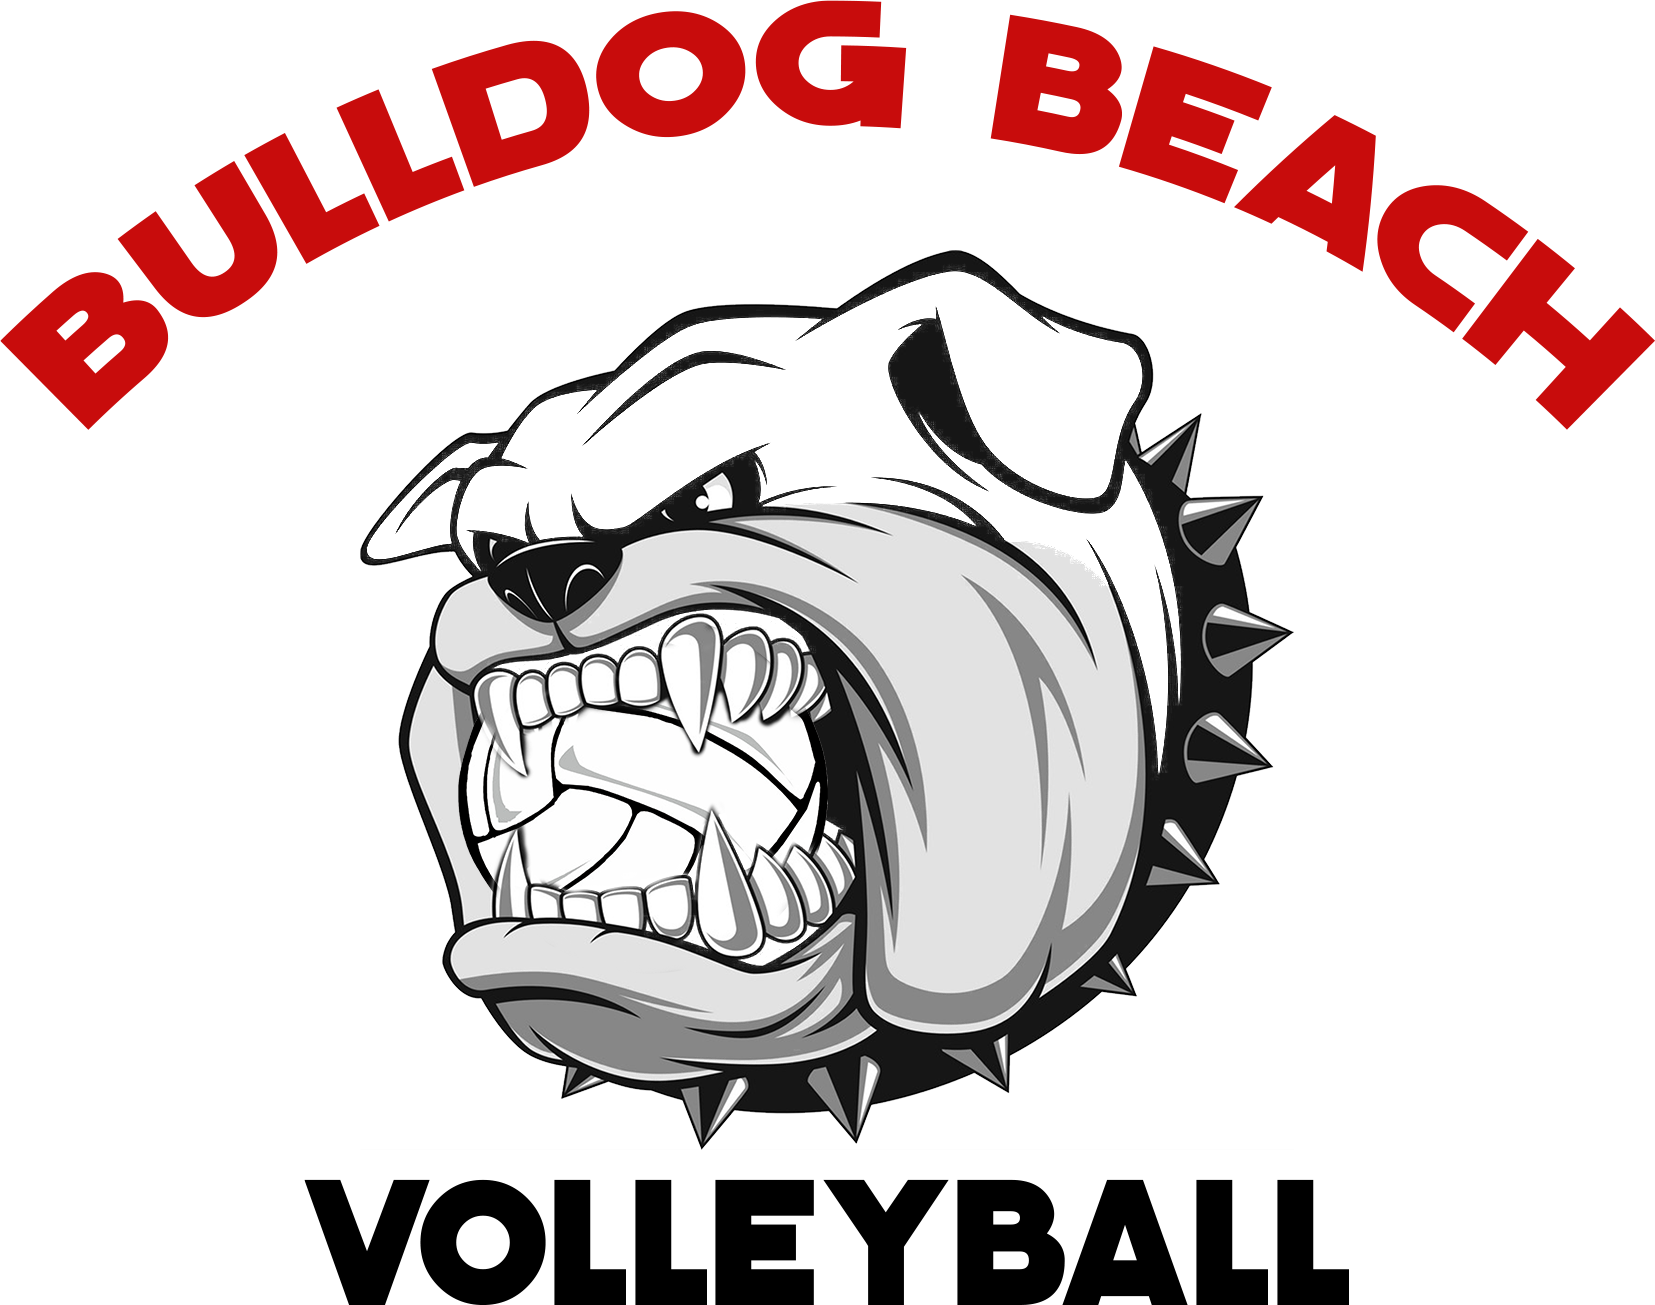 Bulldog Beach Volleyball